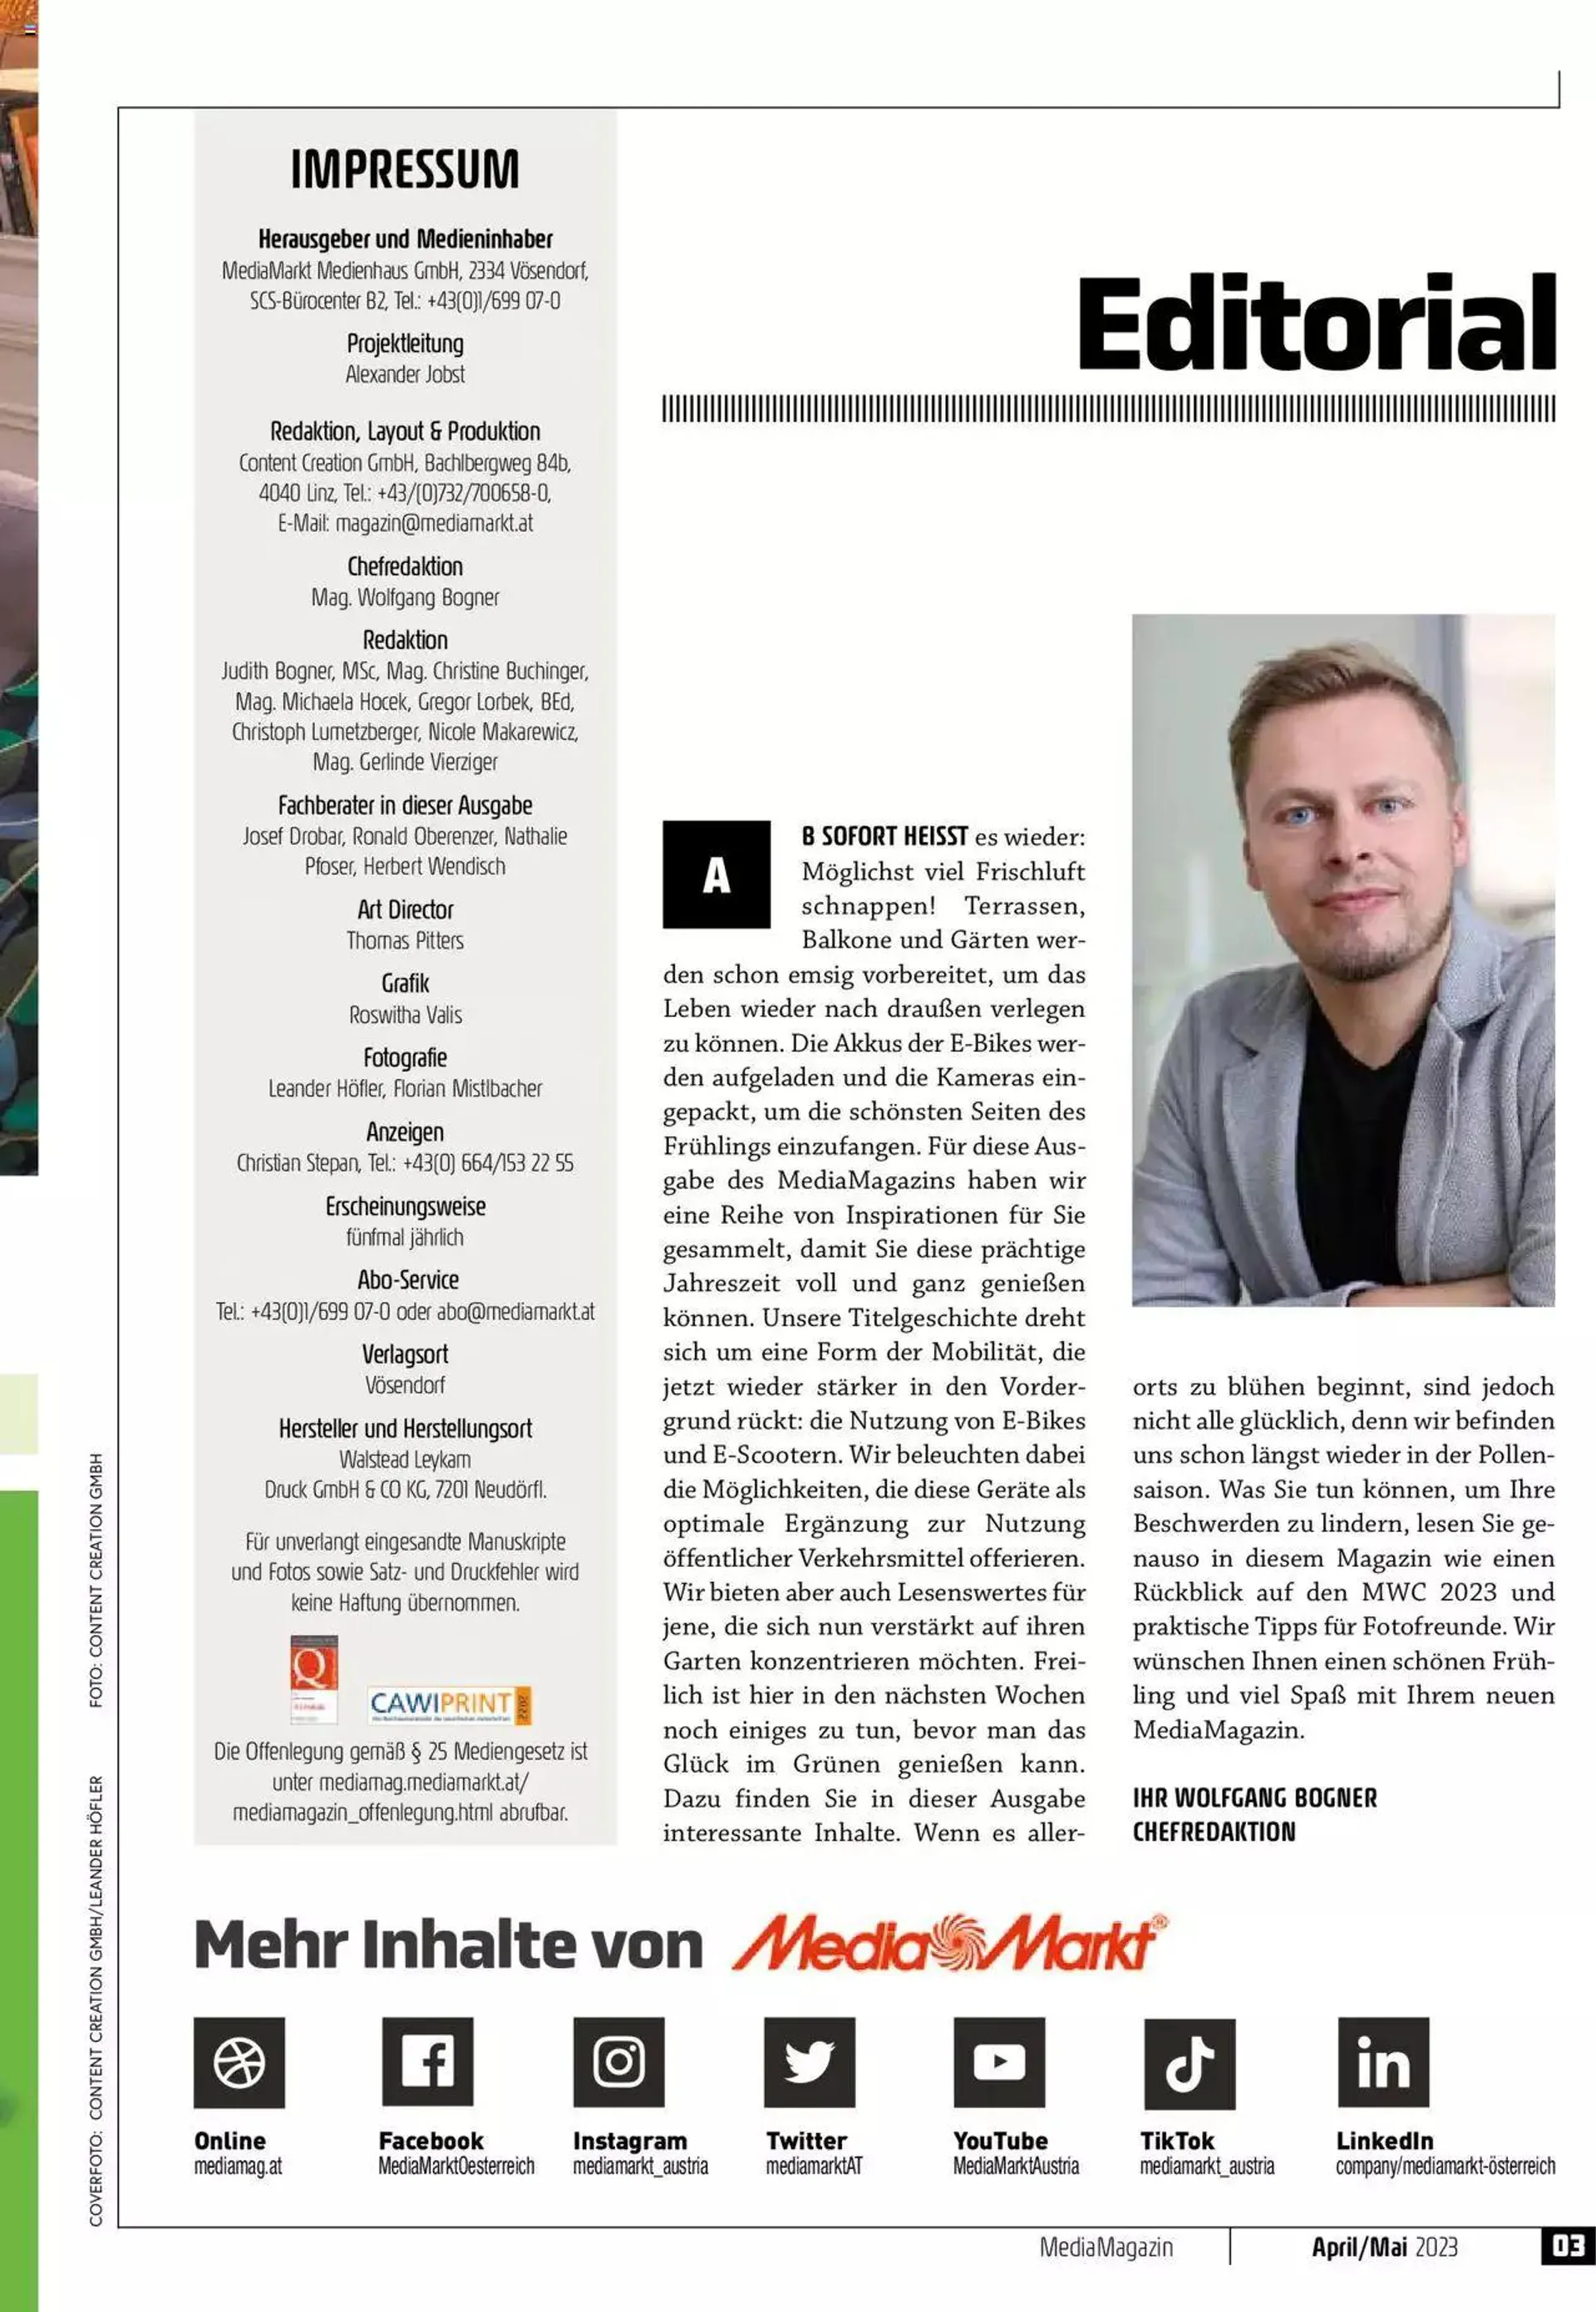 Media Markt Magazin April/Mai 2023 - 2